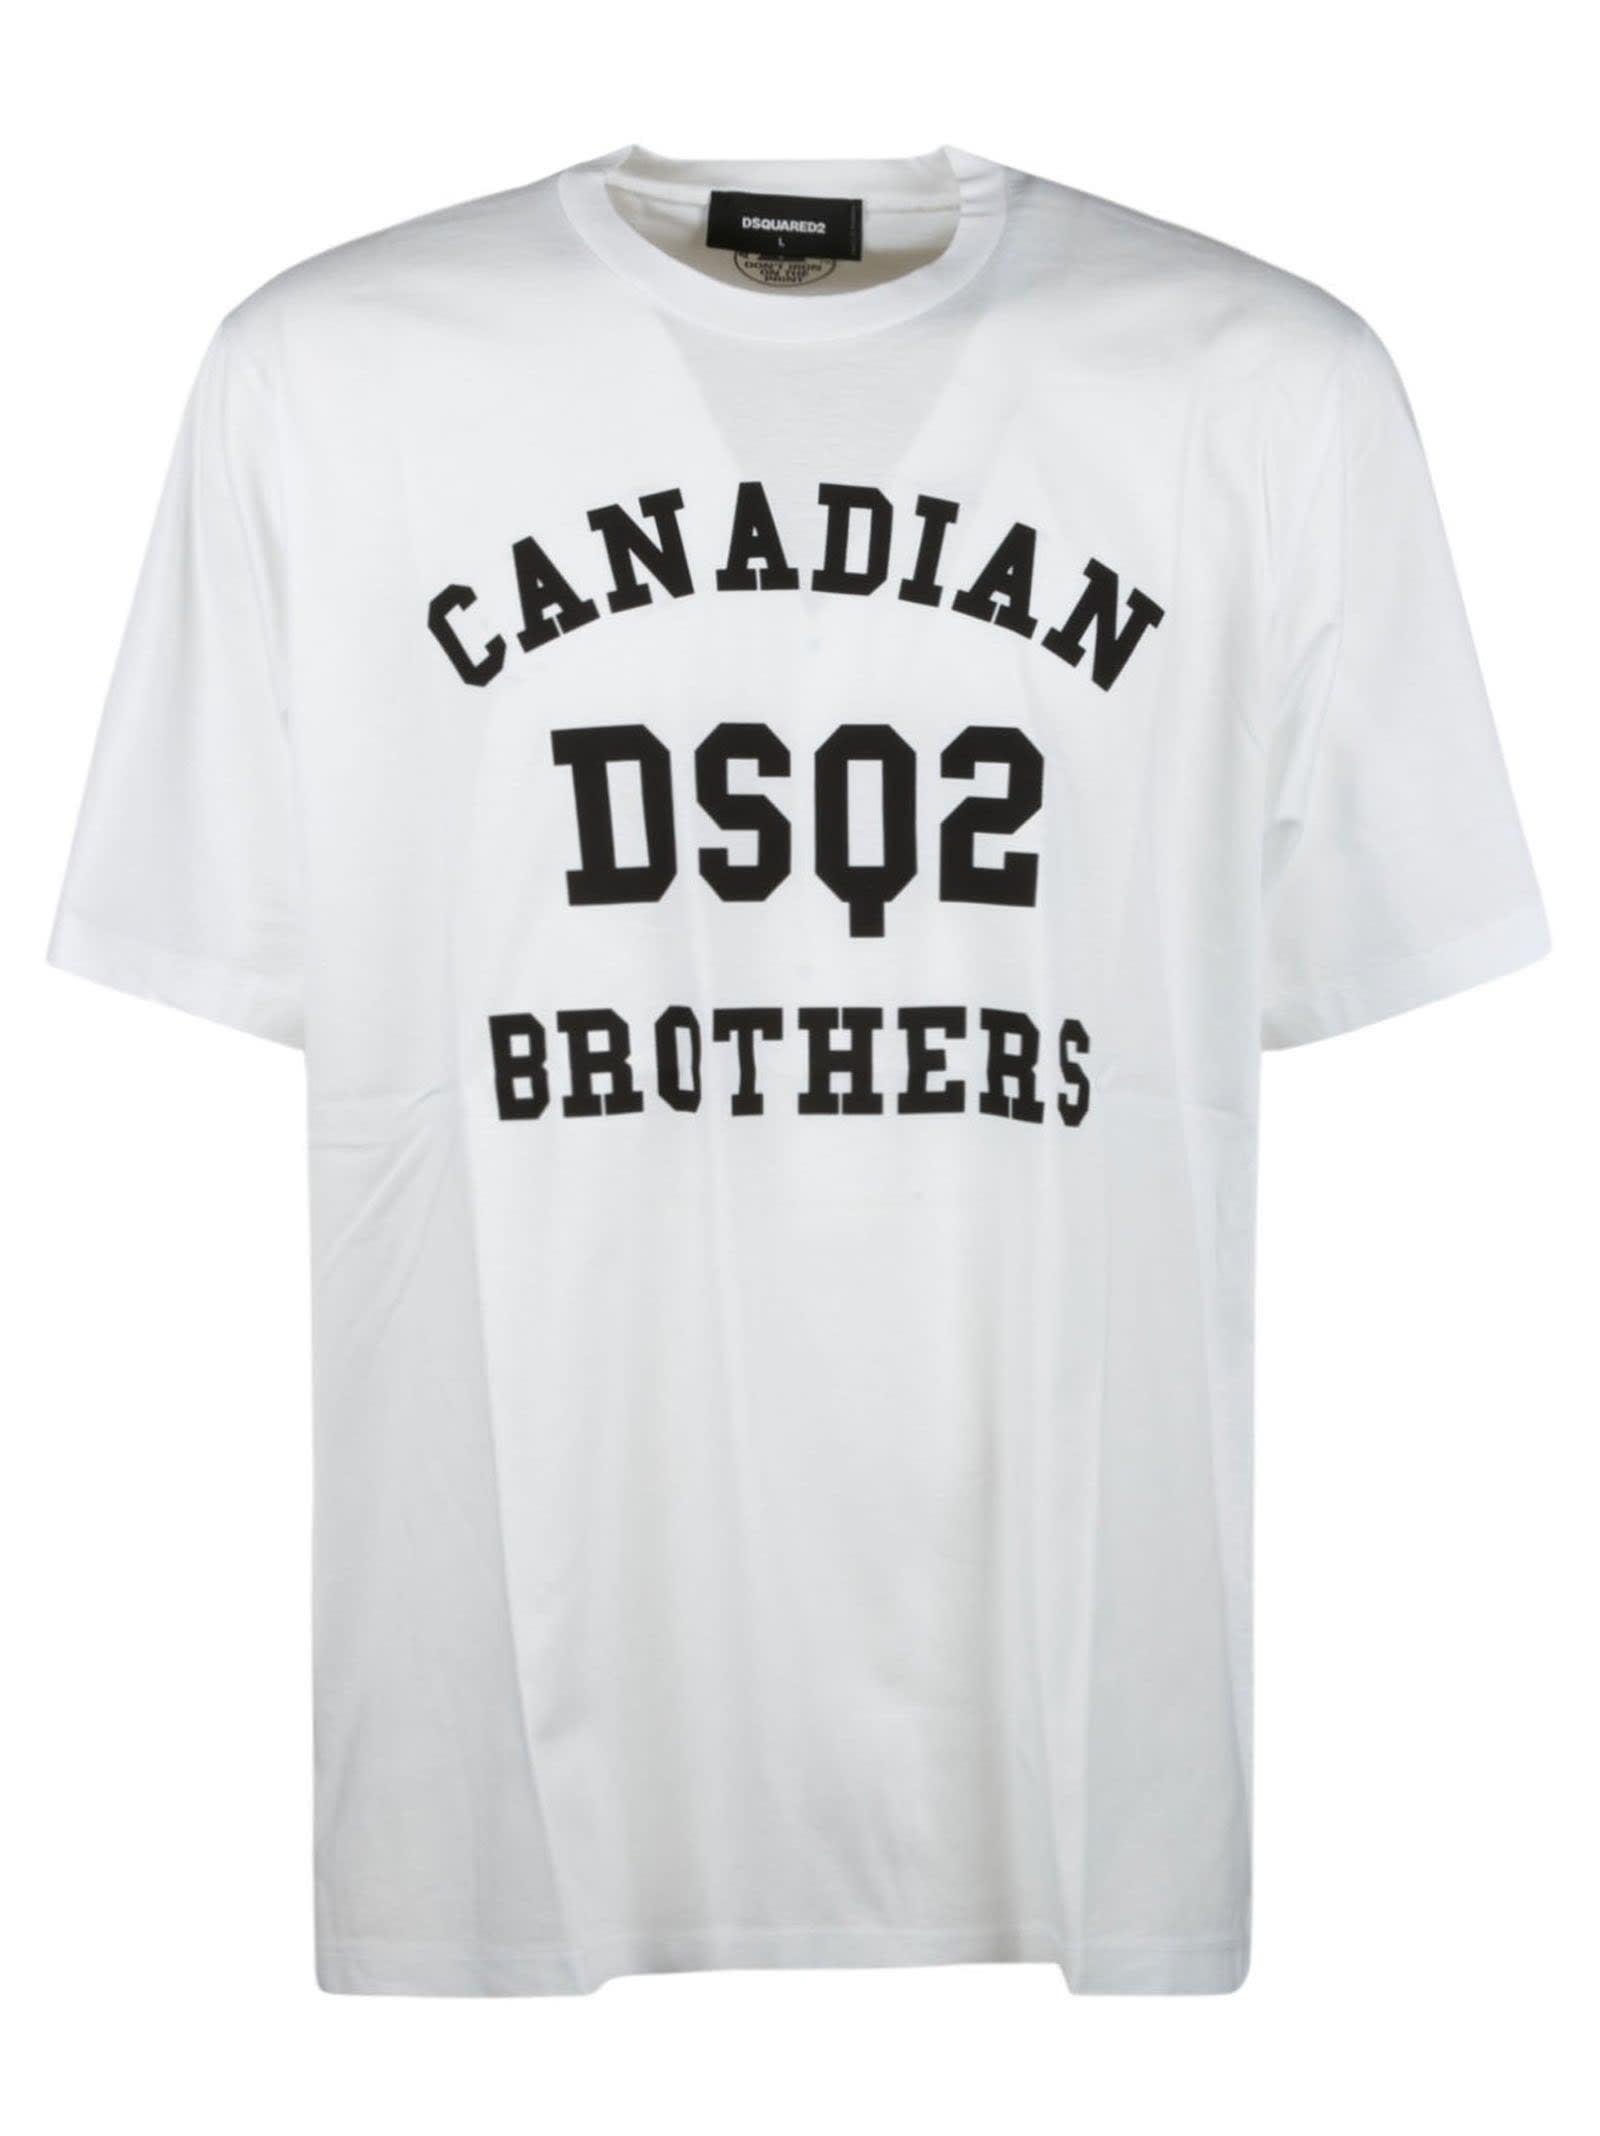 DSquared² Cotton T-shirt in Black for Men Mens T-shirts DSquared² T-shirts Save 49% 